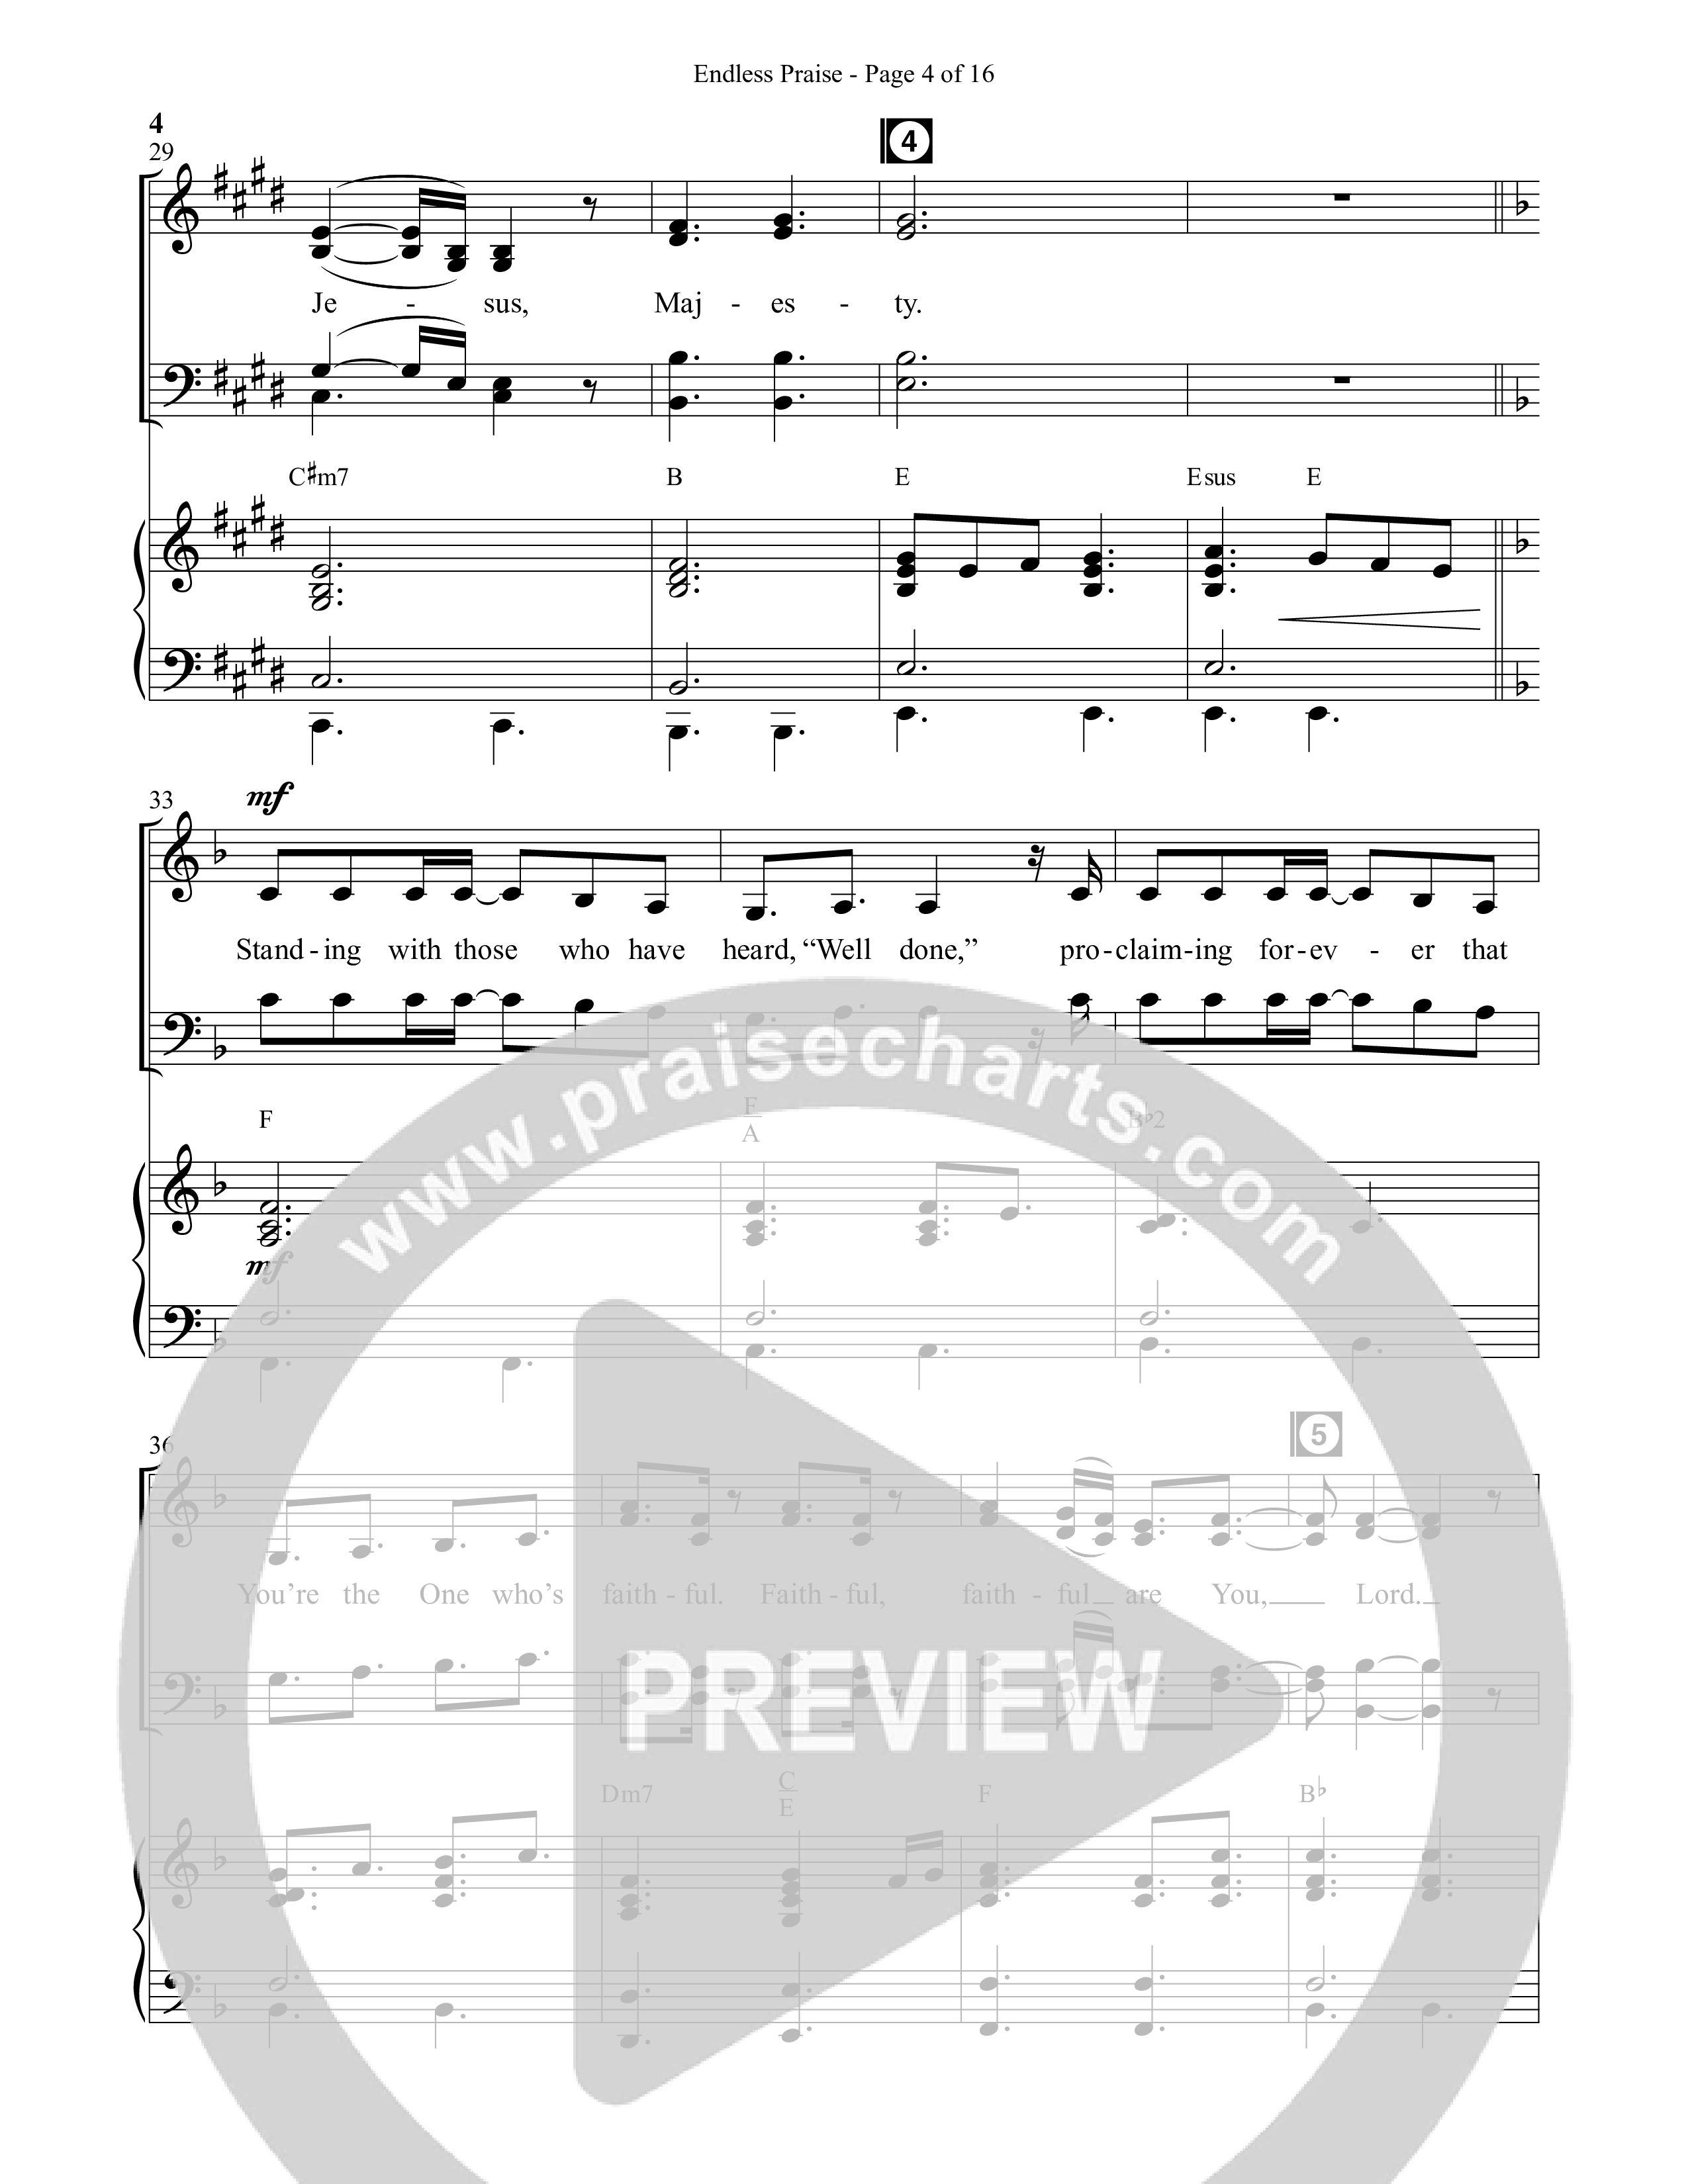 Endless Praise (Choral Anthem SATB) Anthem (SATB/Piano) (Semsen Music / Arr. Daniel Semsen)